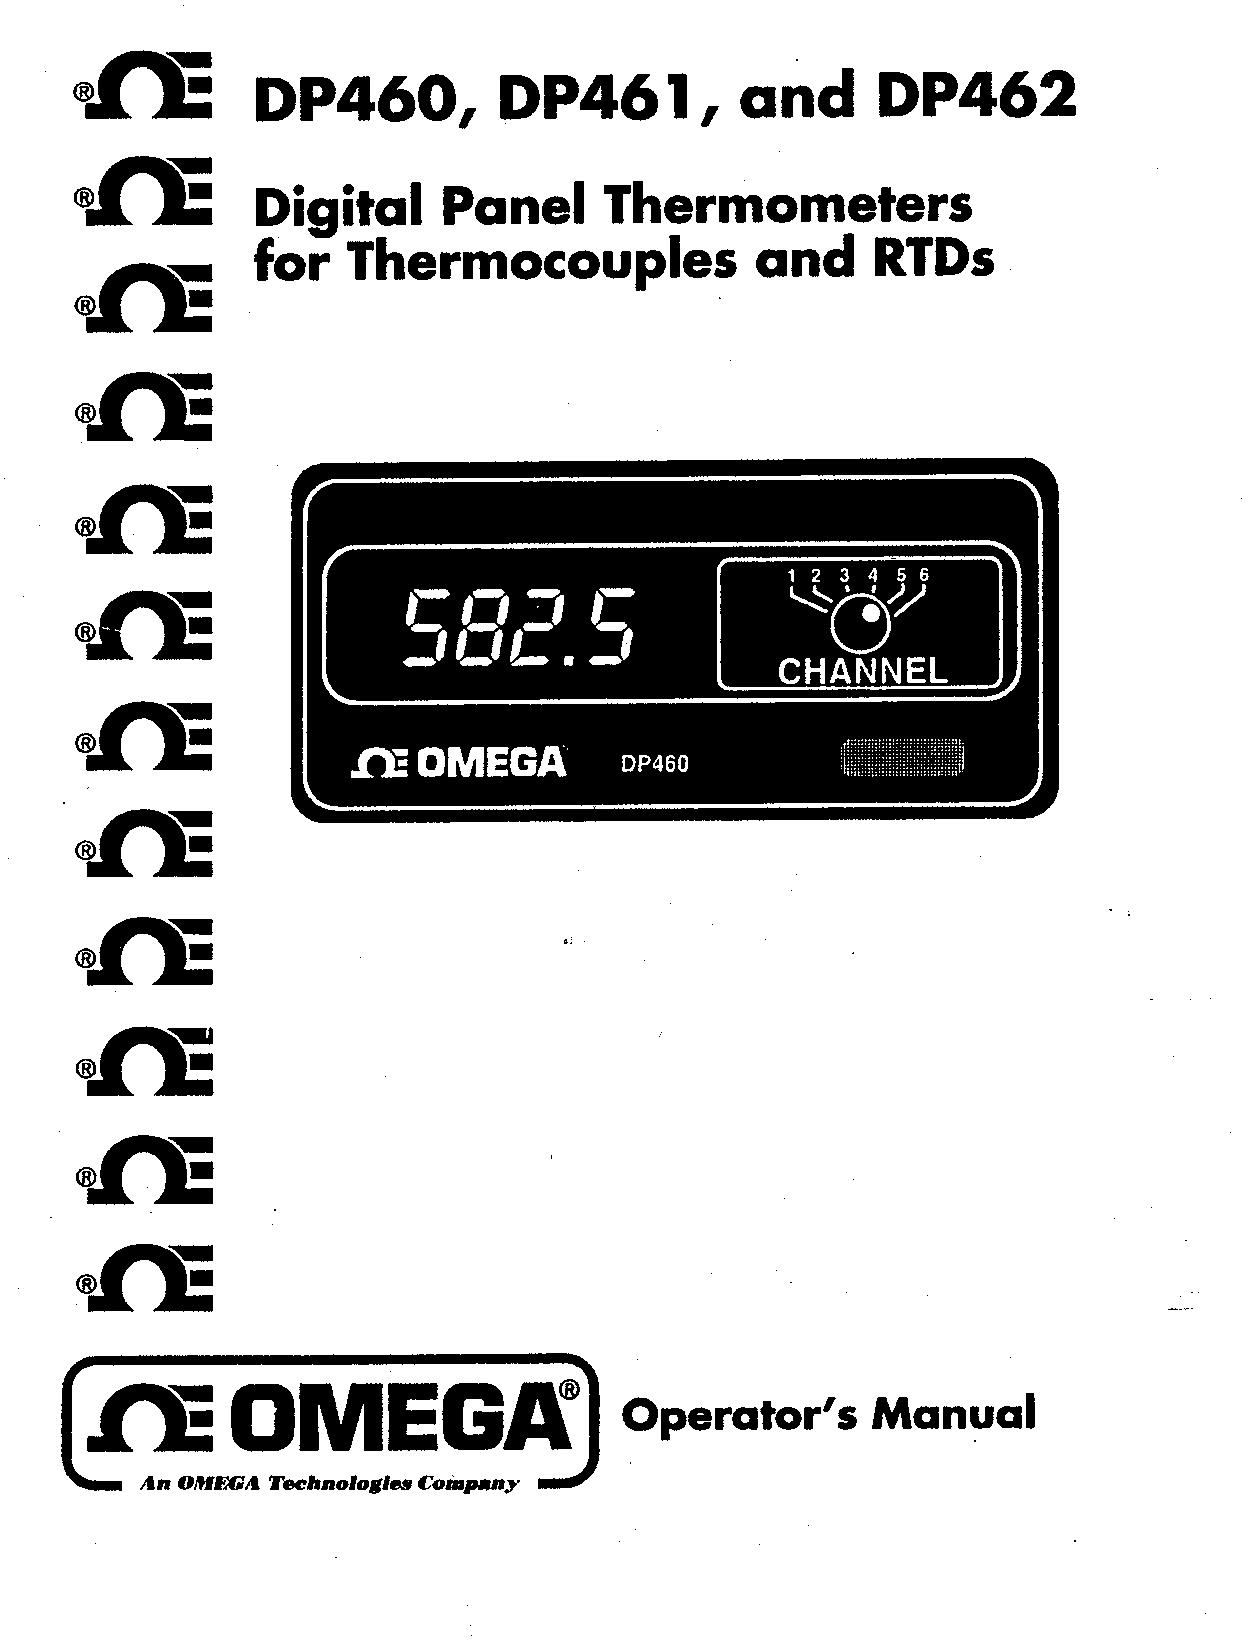 Iomega DP462 Thermometer User Manual